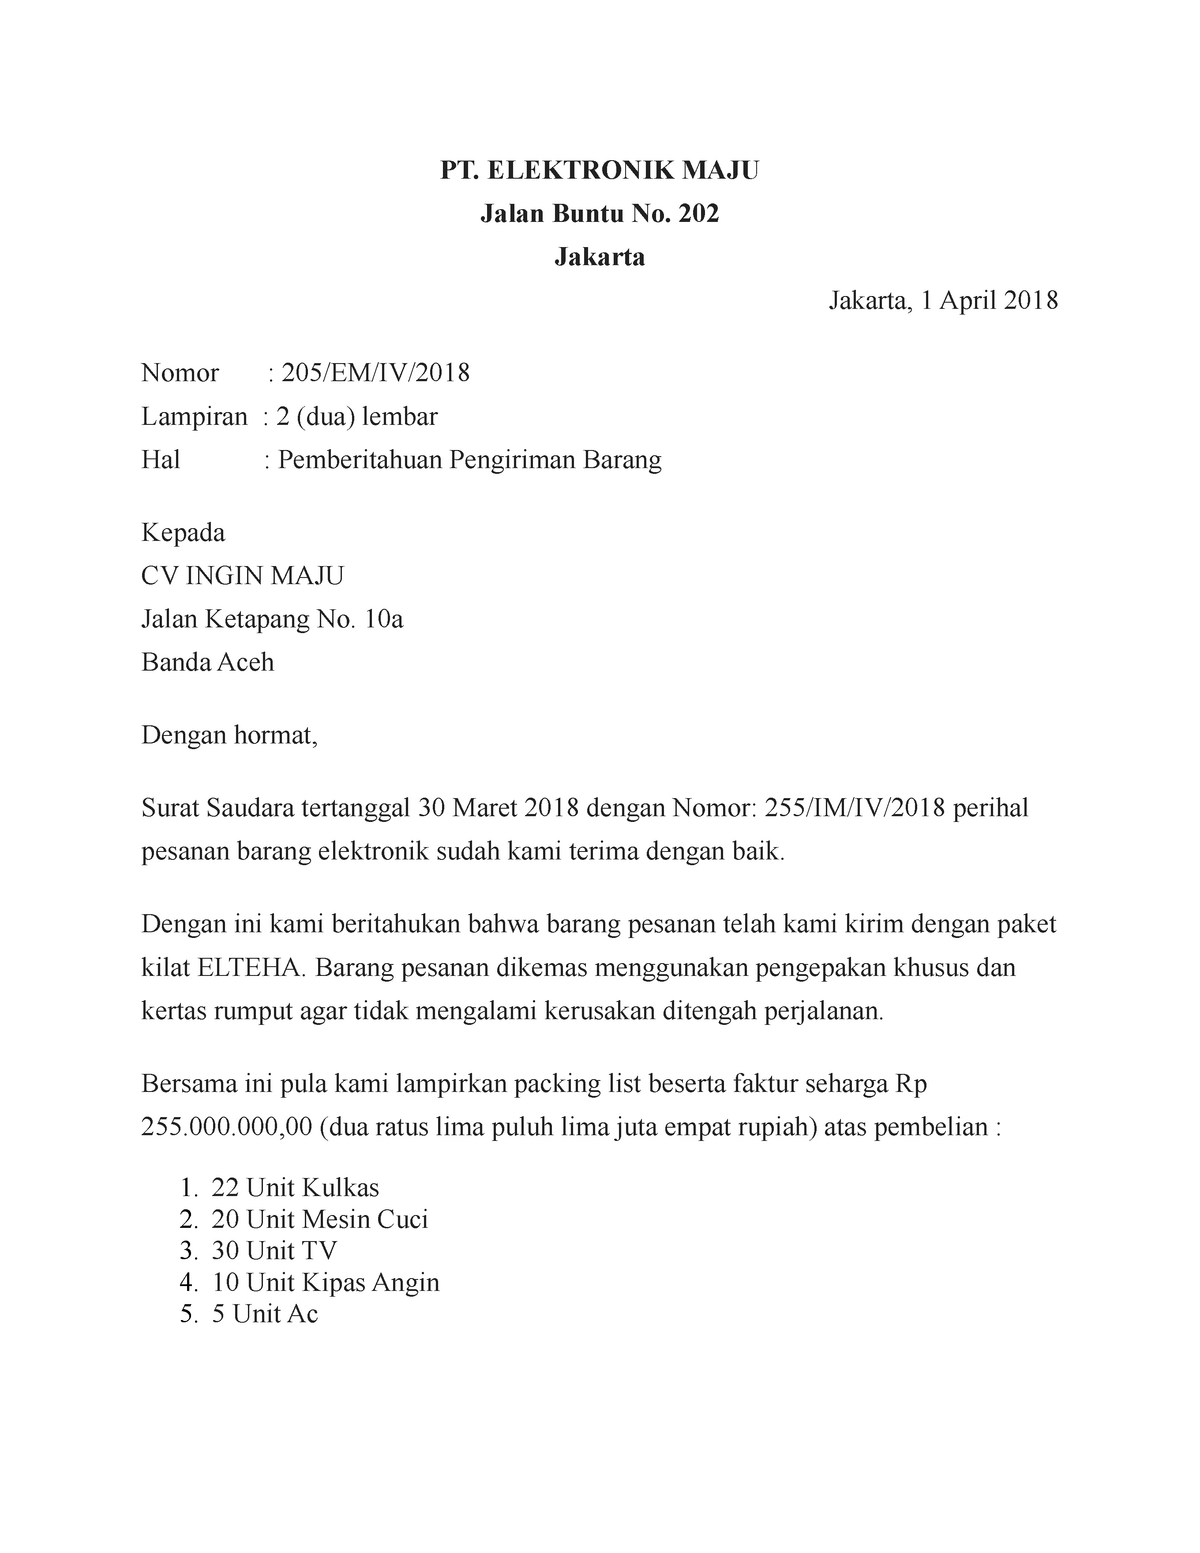 Surat Bisnis Pemberitahuan Pengiriman Barang Pt Elektronik Maju Jalan Buntu No 202 Jakarta Studocu